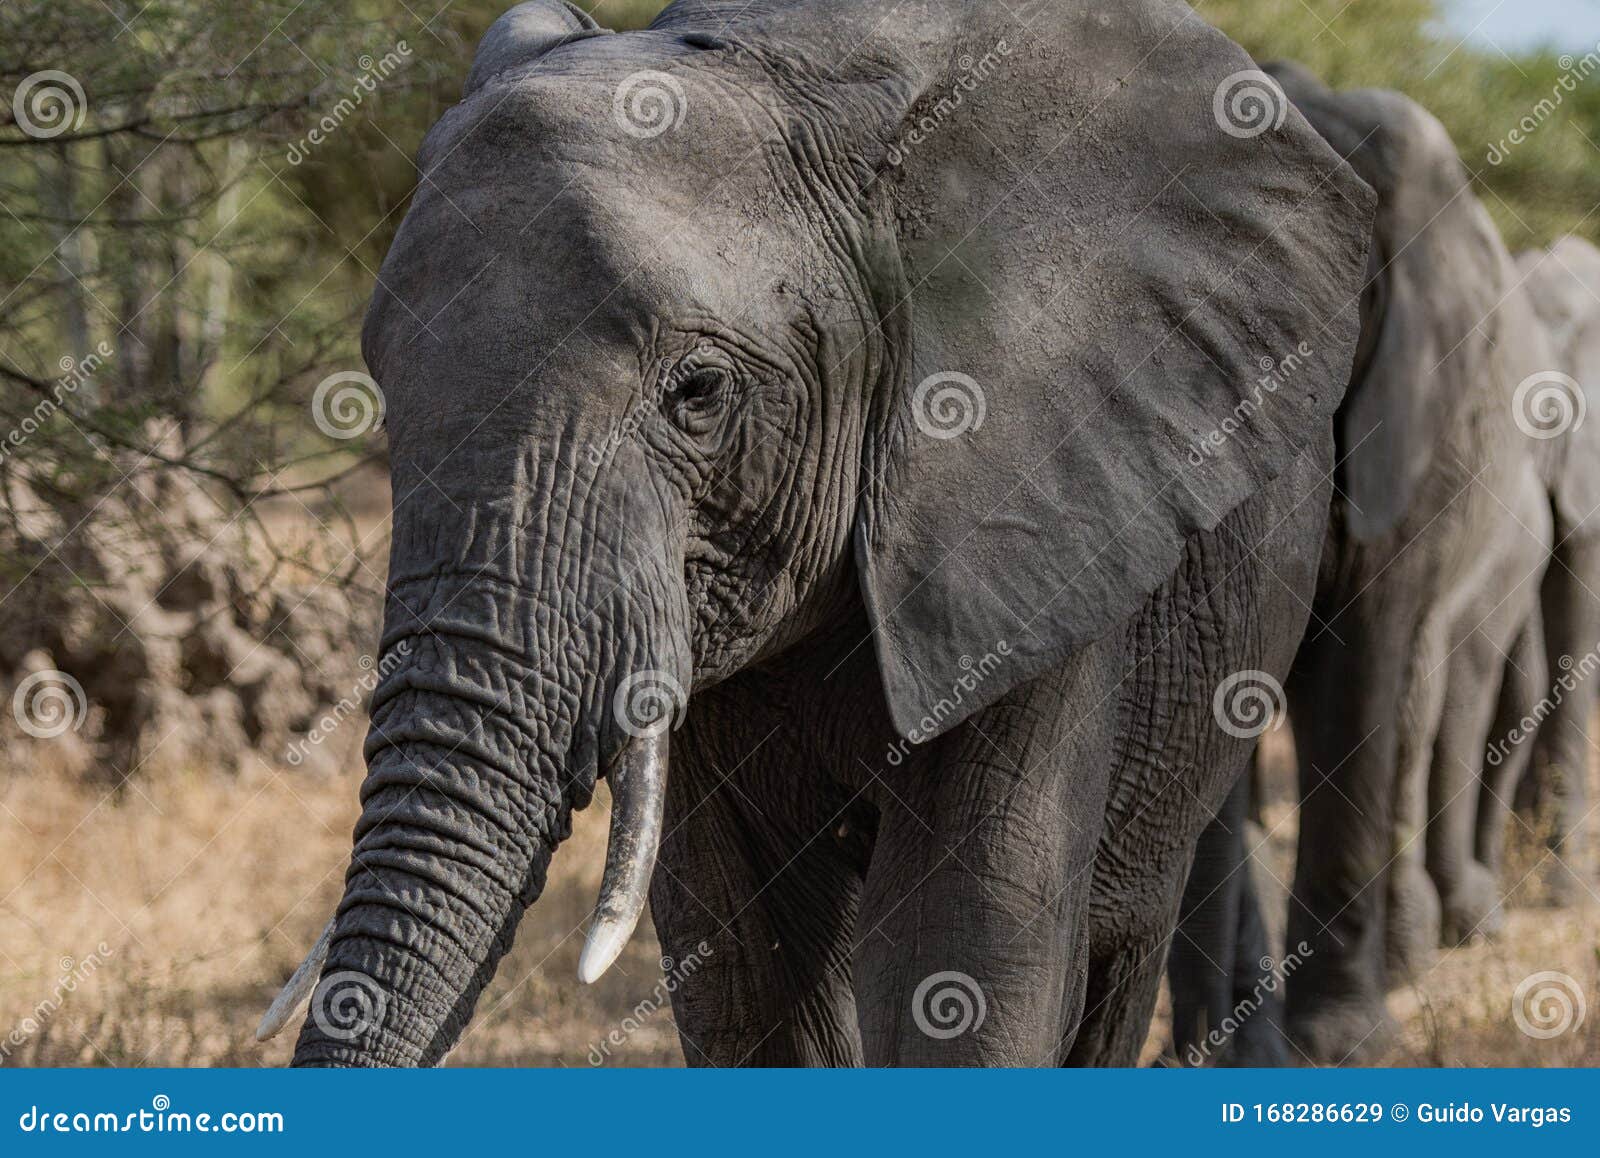 tanzania, africa, animal and landscape, elephant